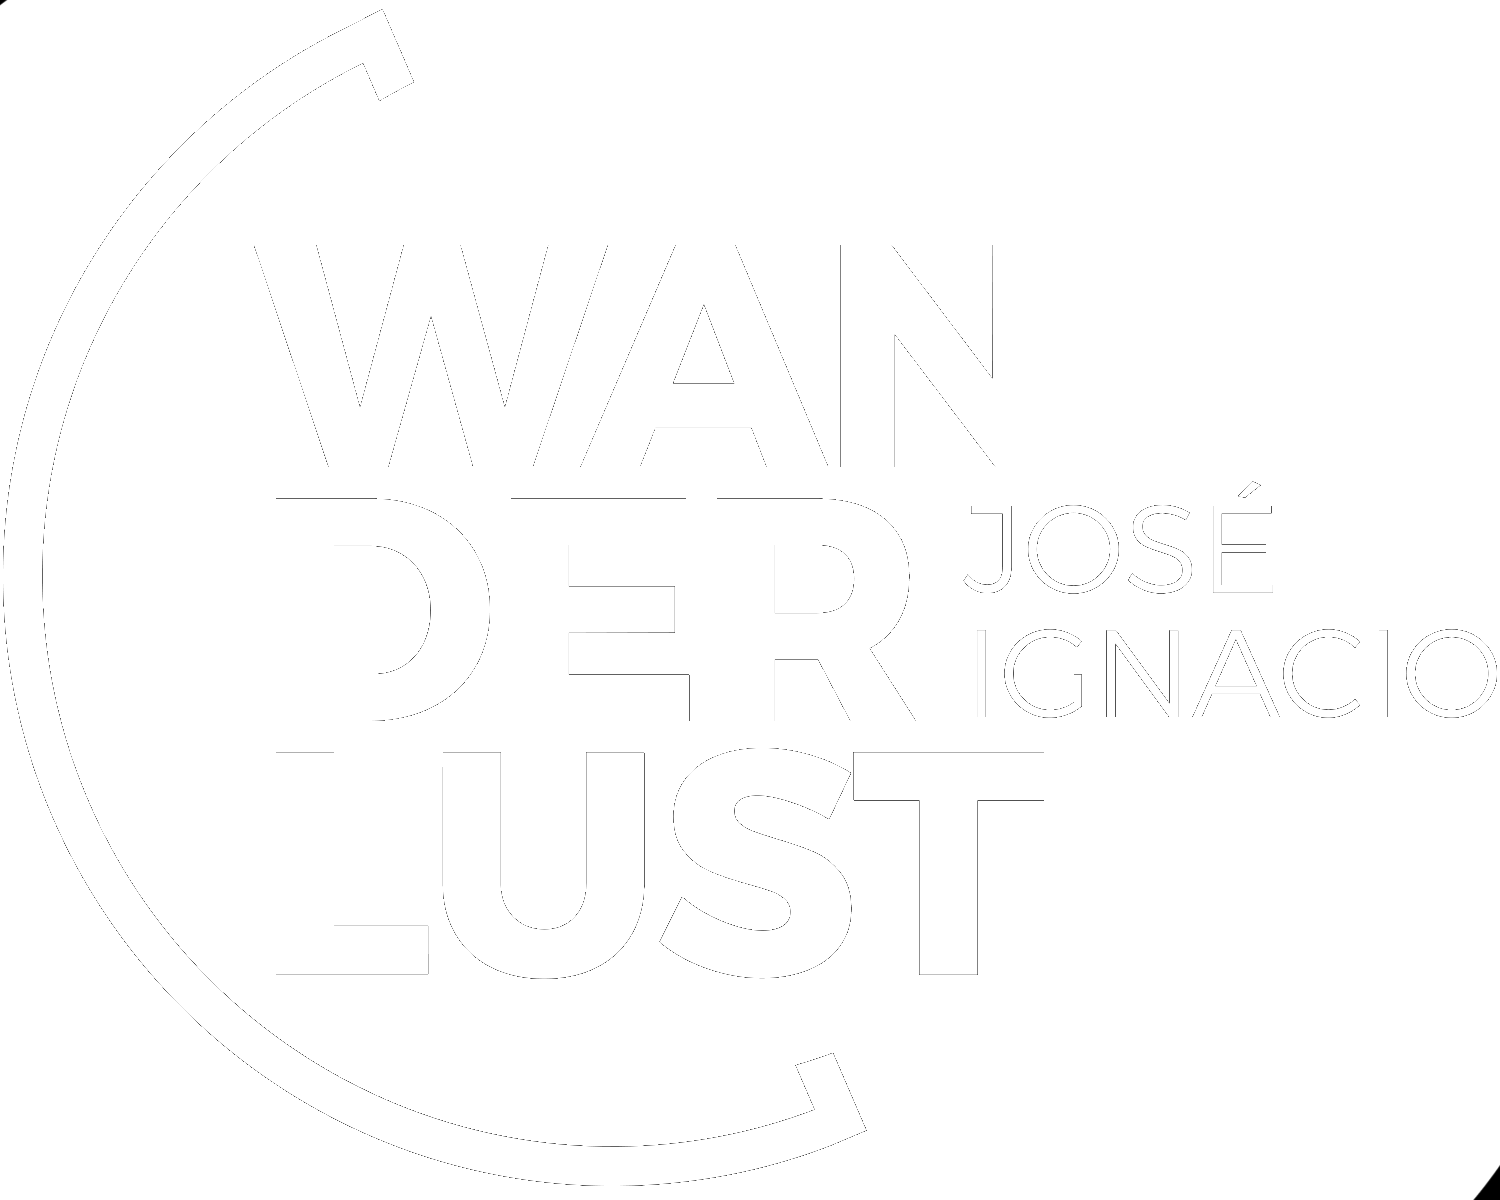 Wanderlust Jose Ignacio\ title=